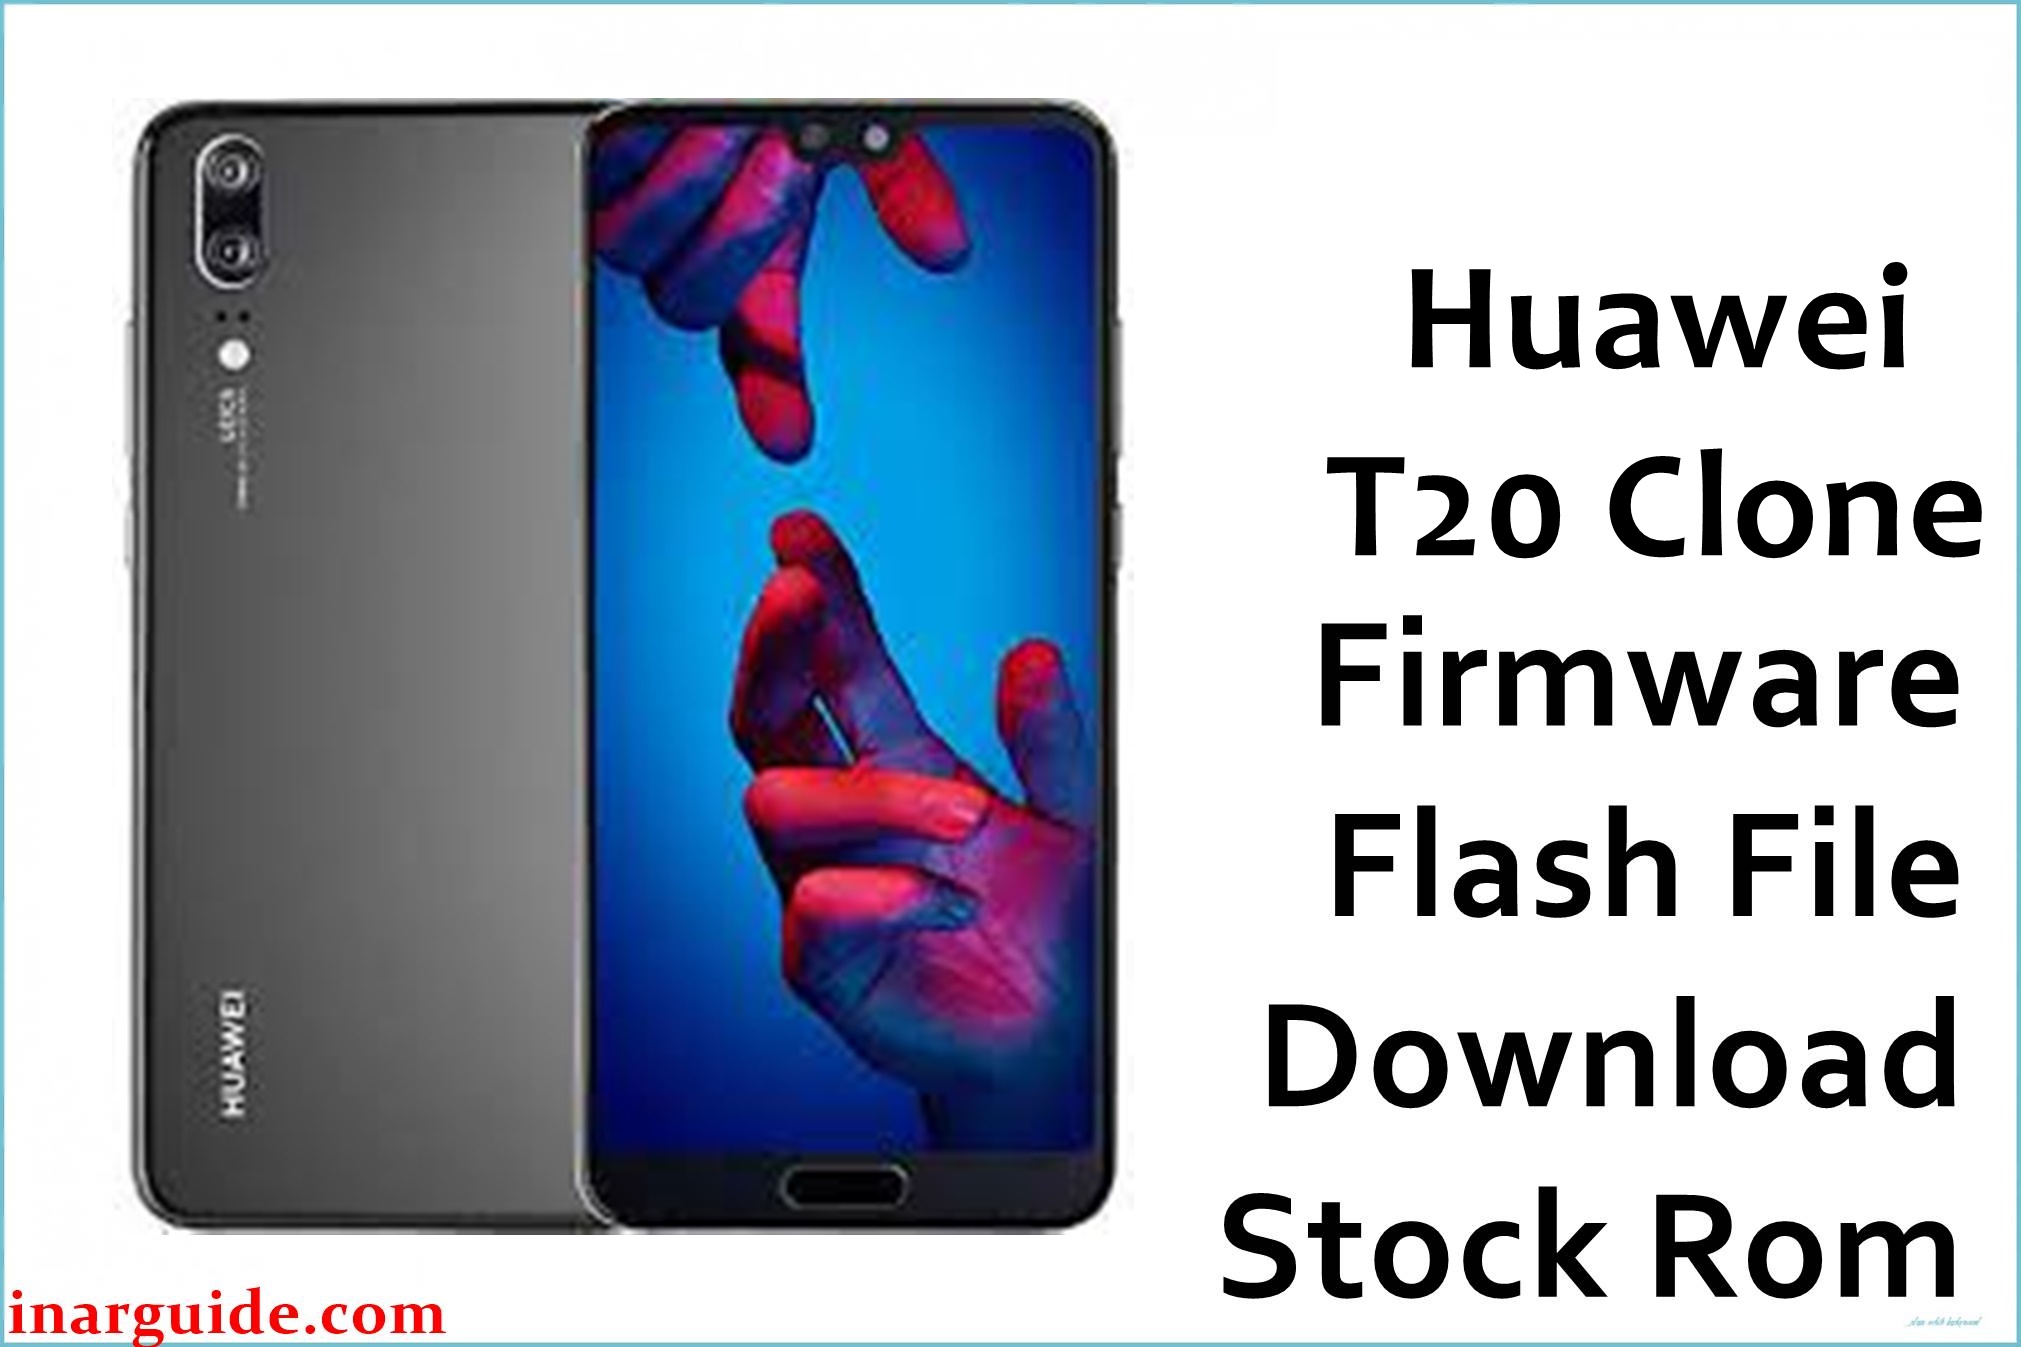 Huawei T20 Clone